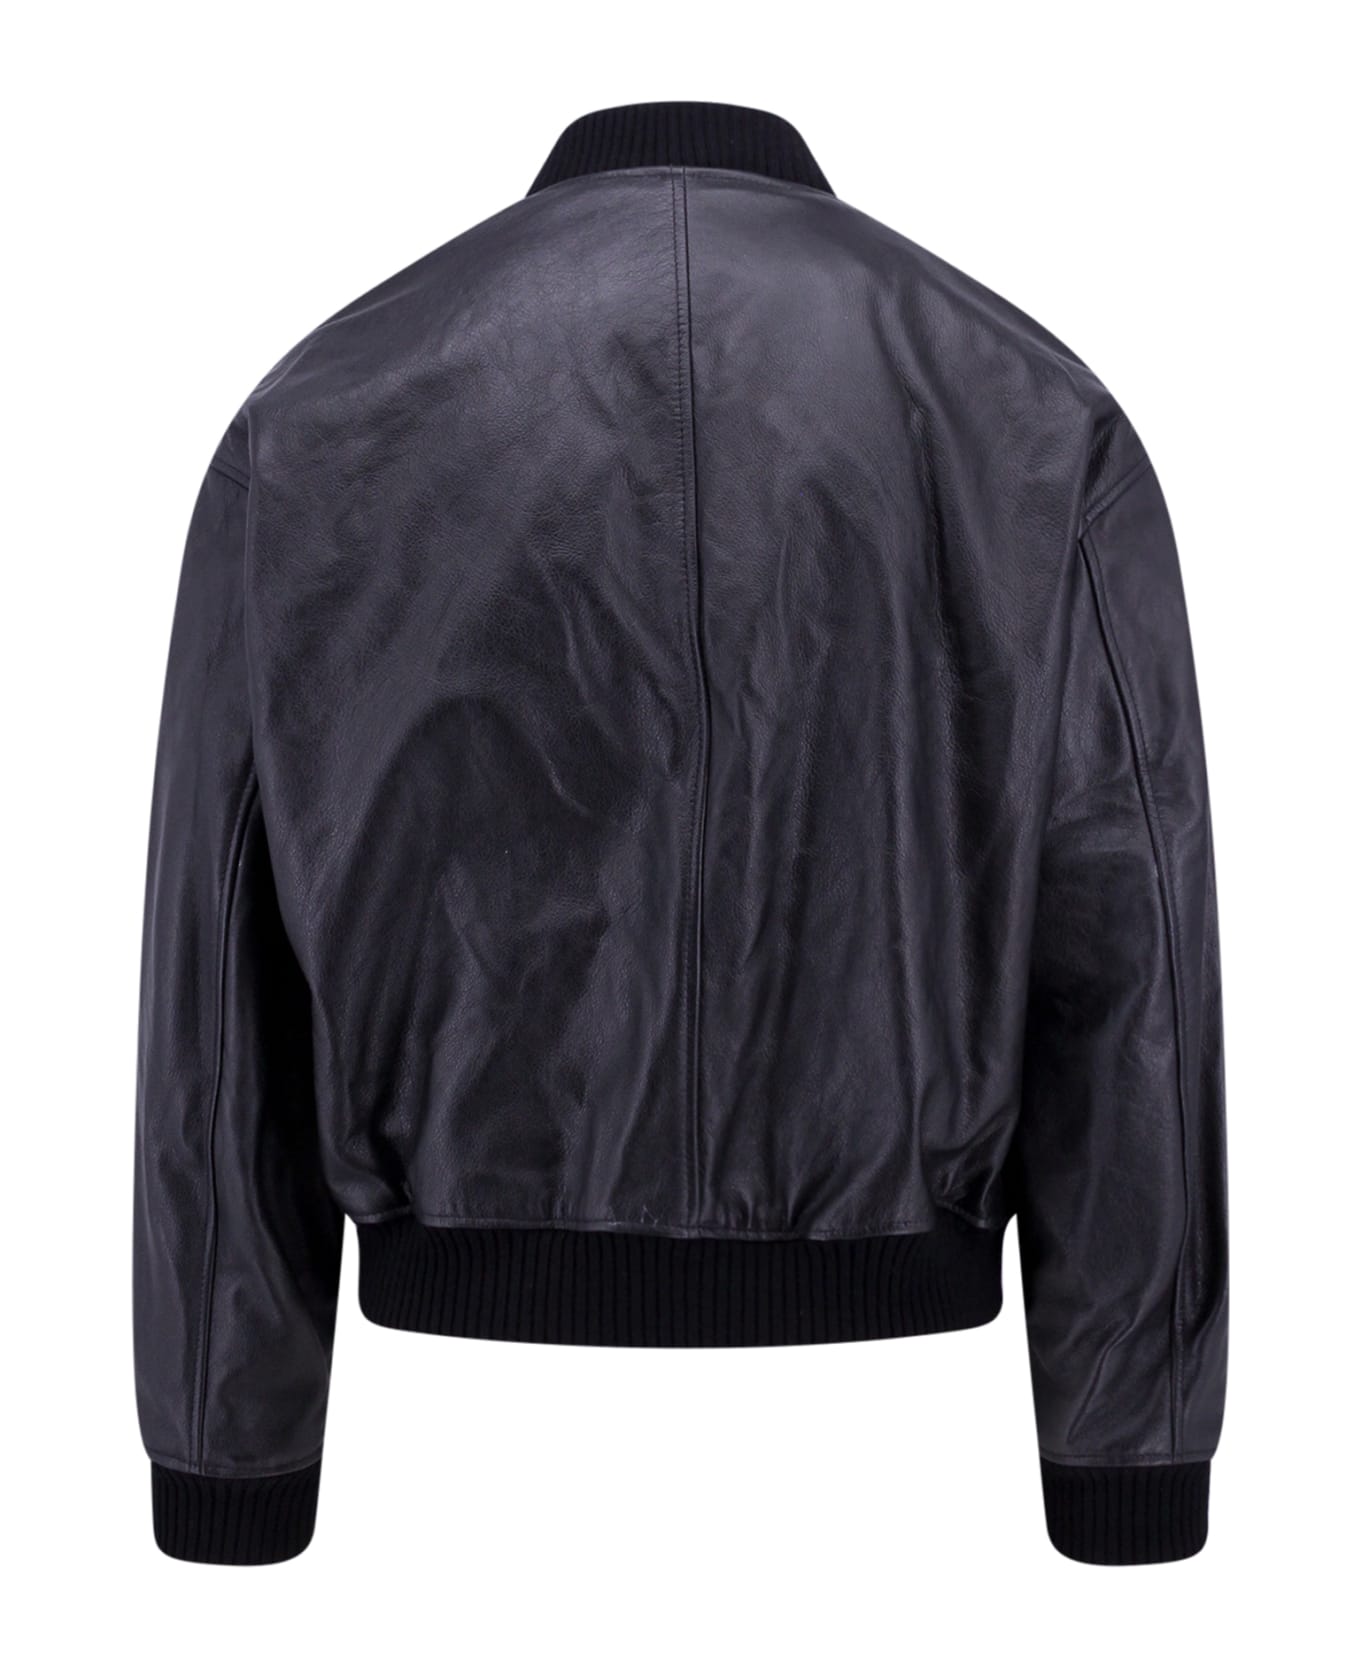 Dolce & Gabbana Leather Jacket - black